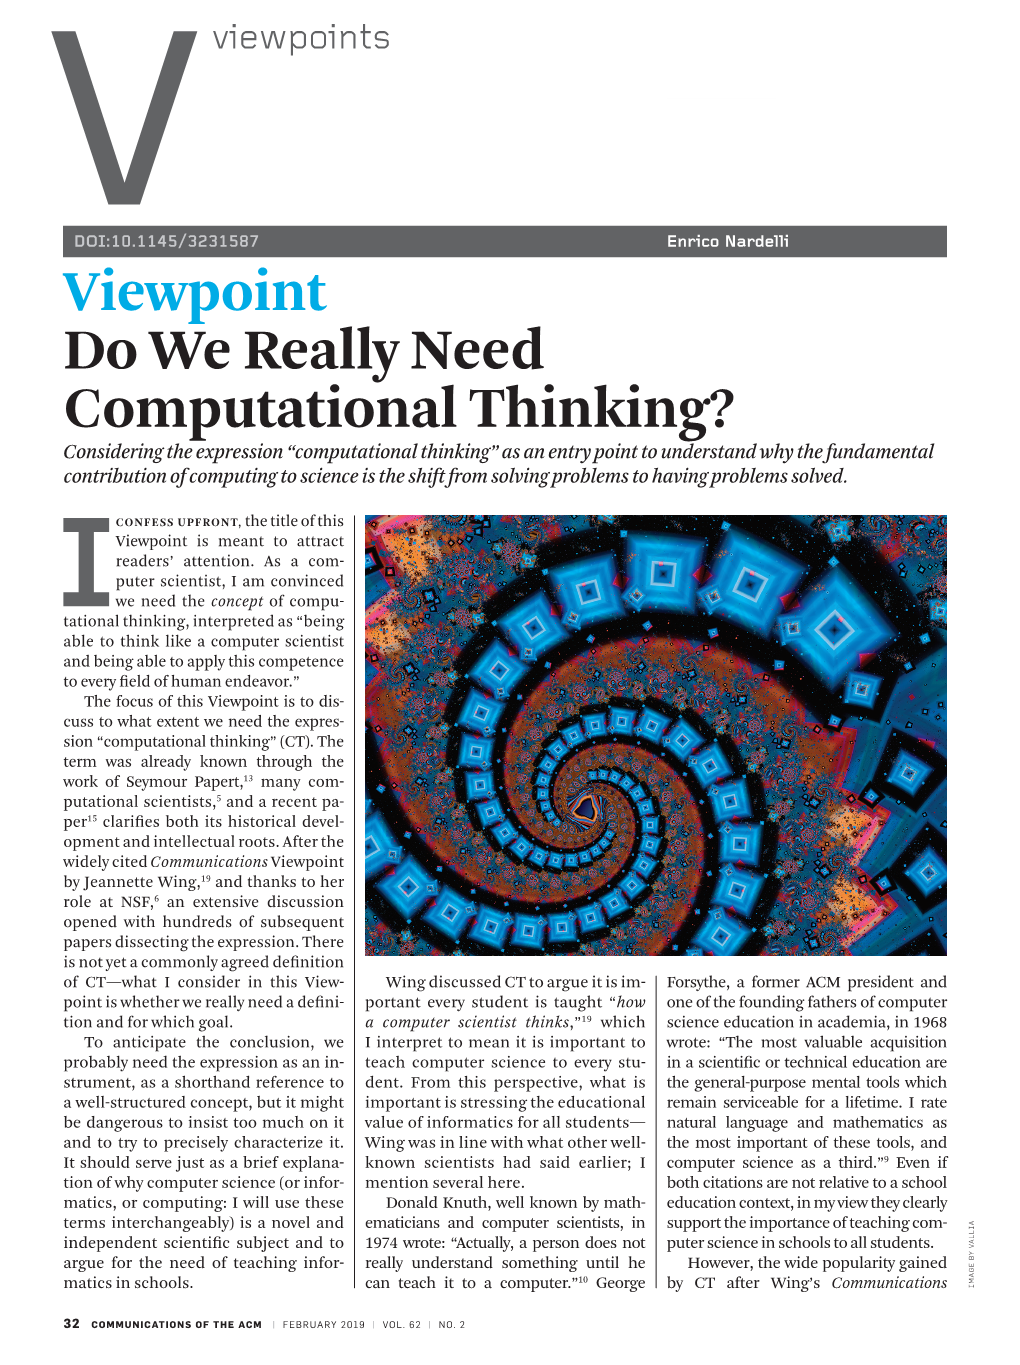 Viewpoint Do We Really Need Computational Thinking?